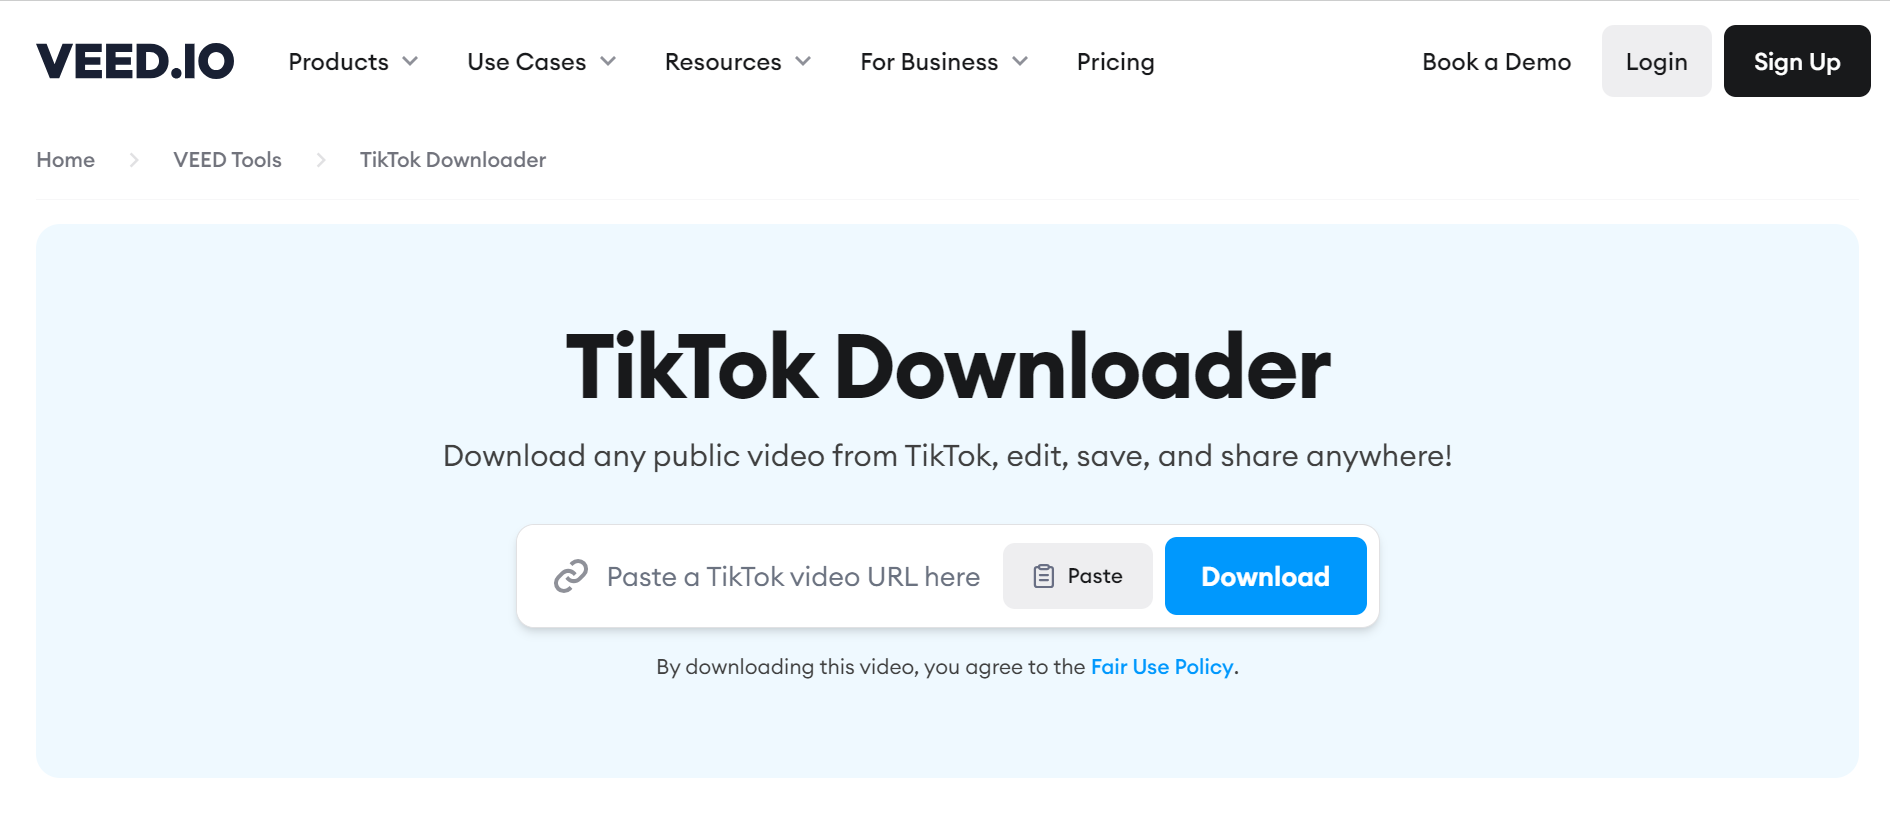 download tiktok videos without watermark